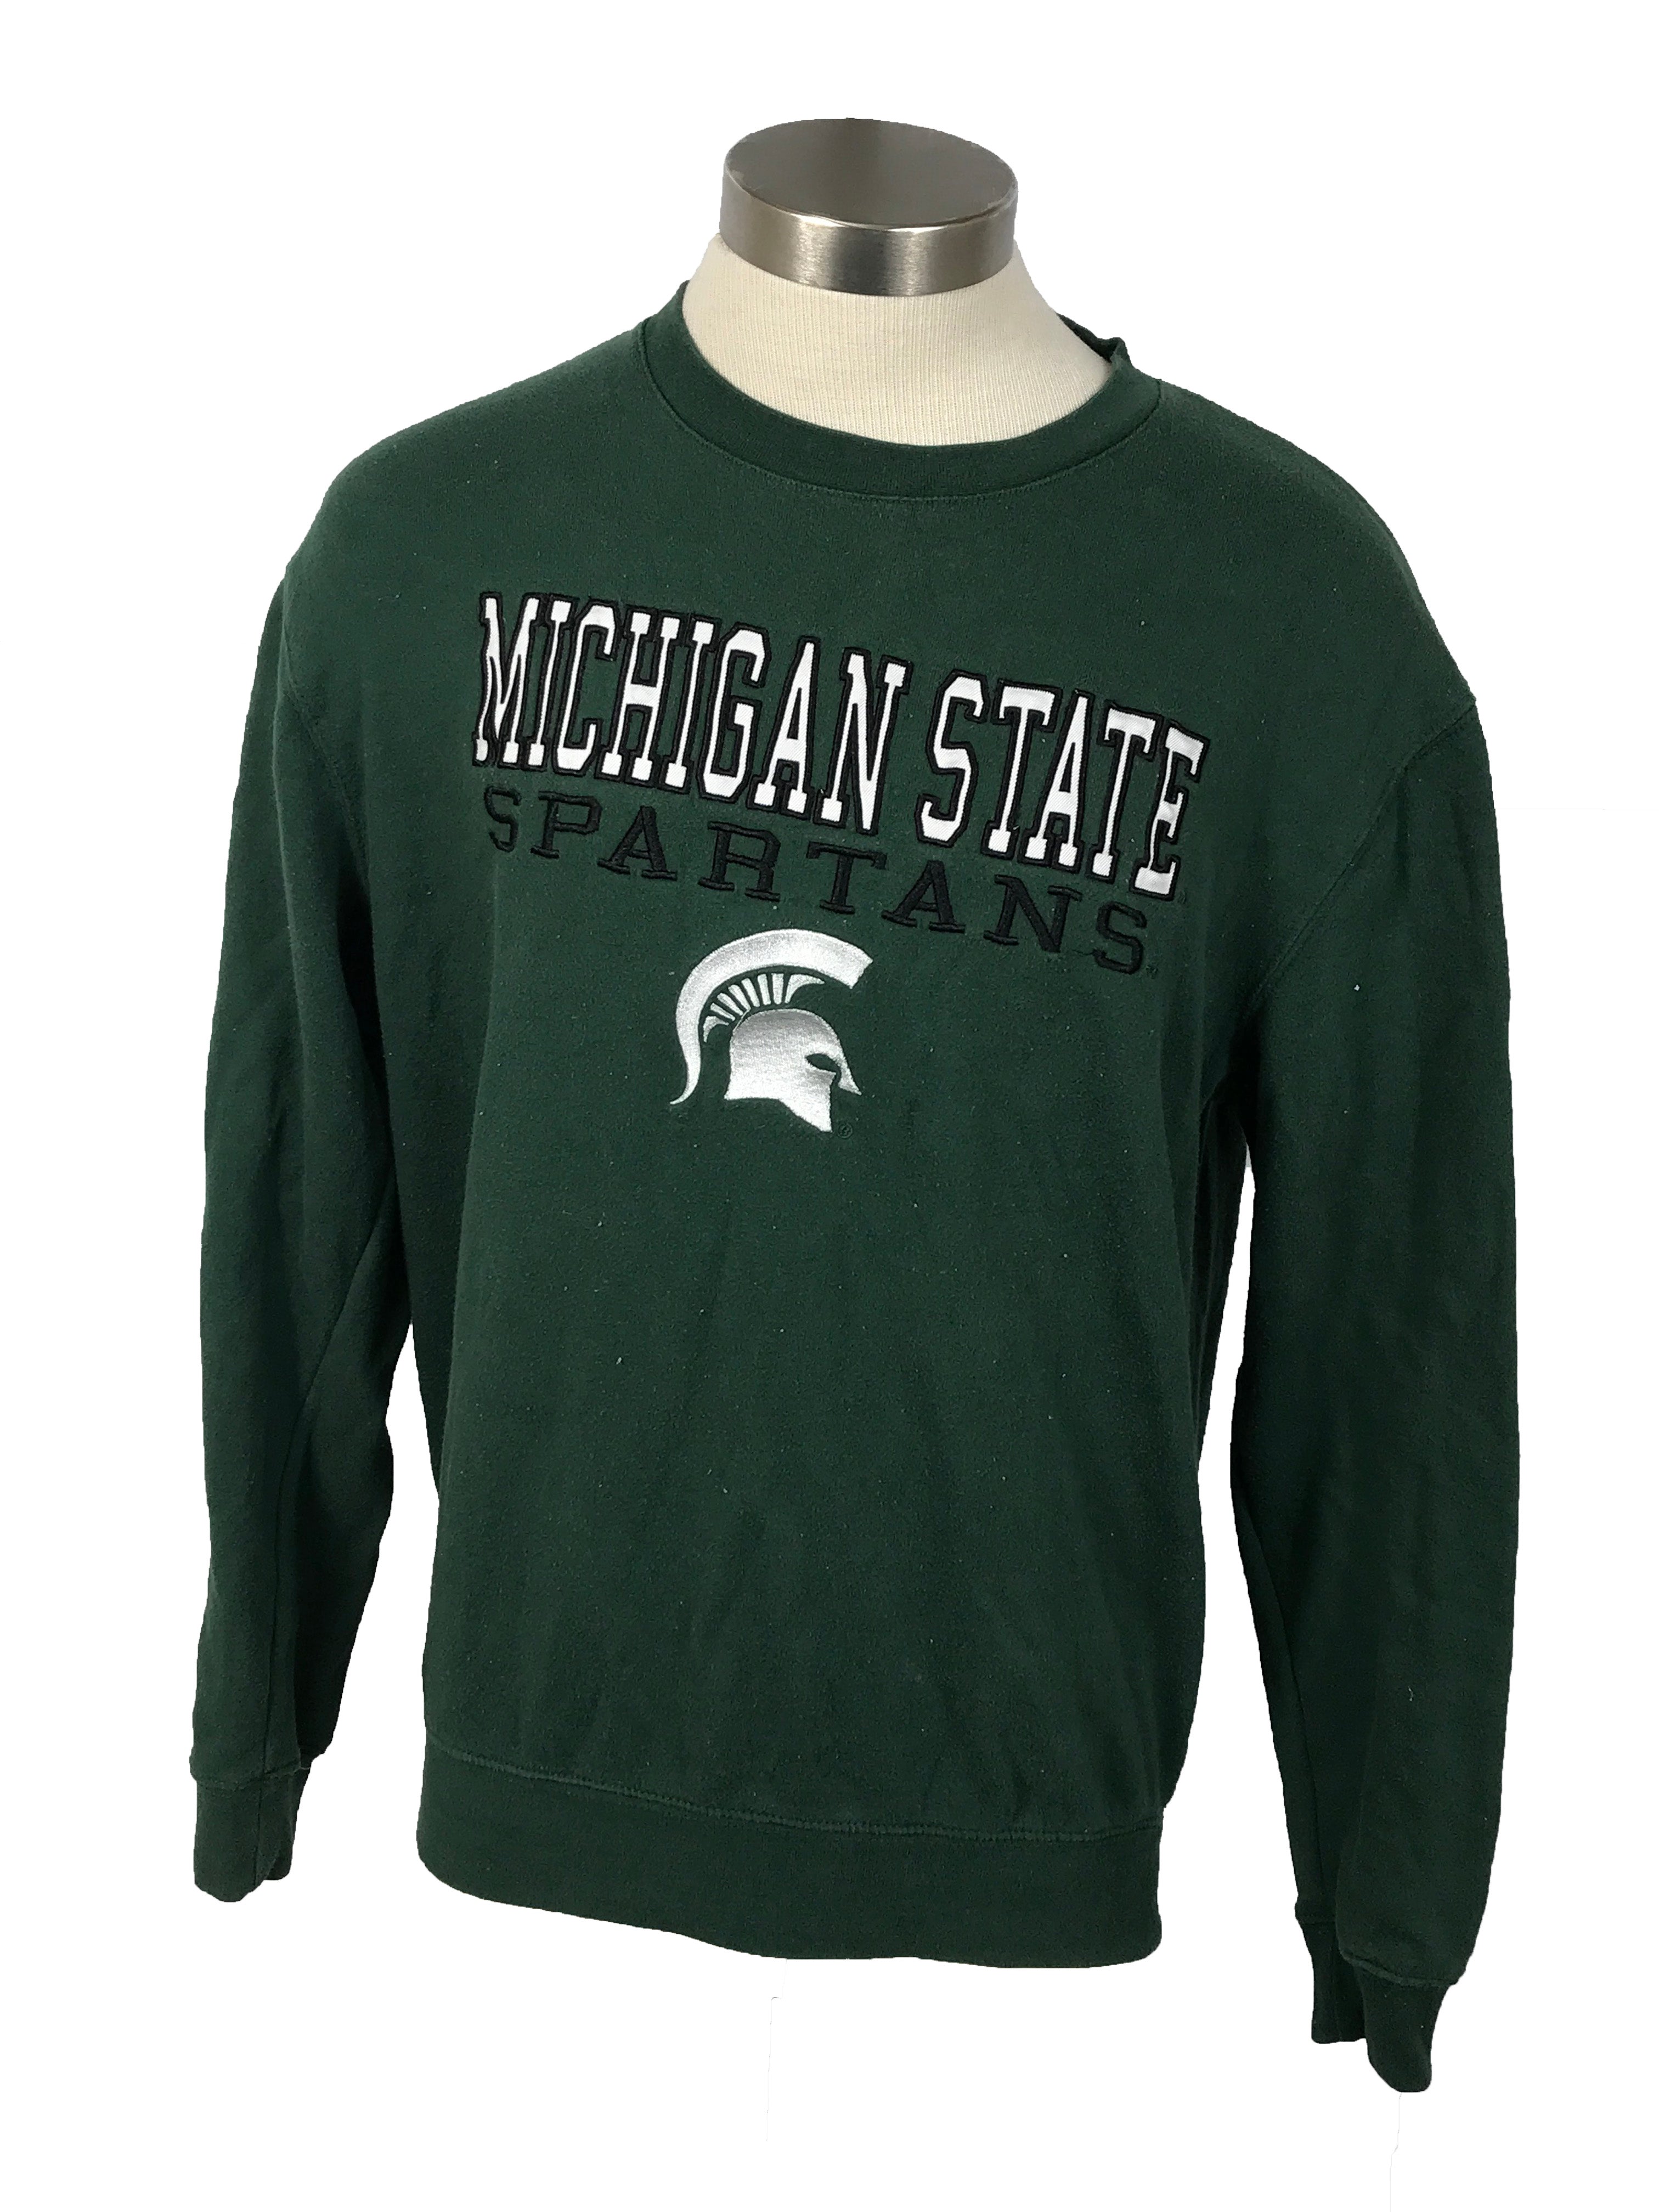 Michigan State University Green Crewneck Sweatshirt Unisex Size M